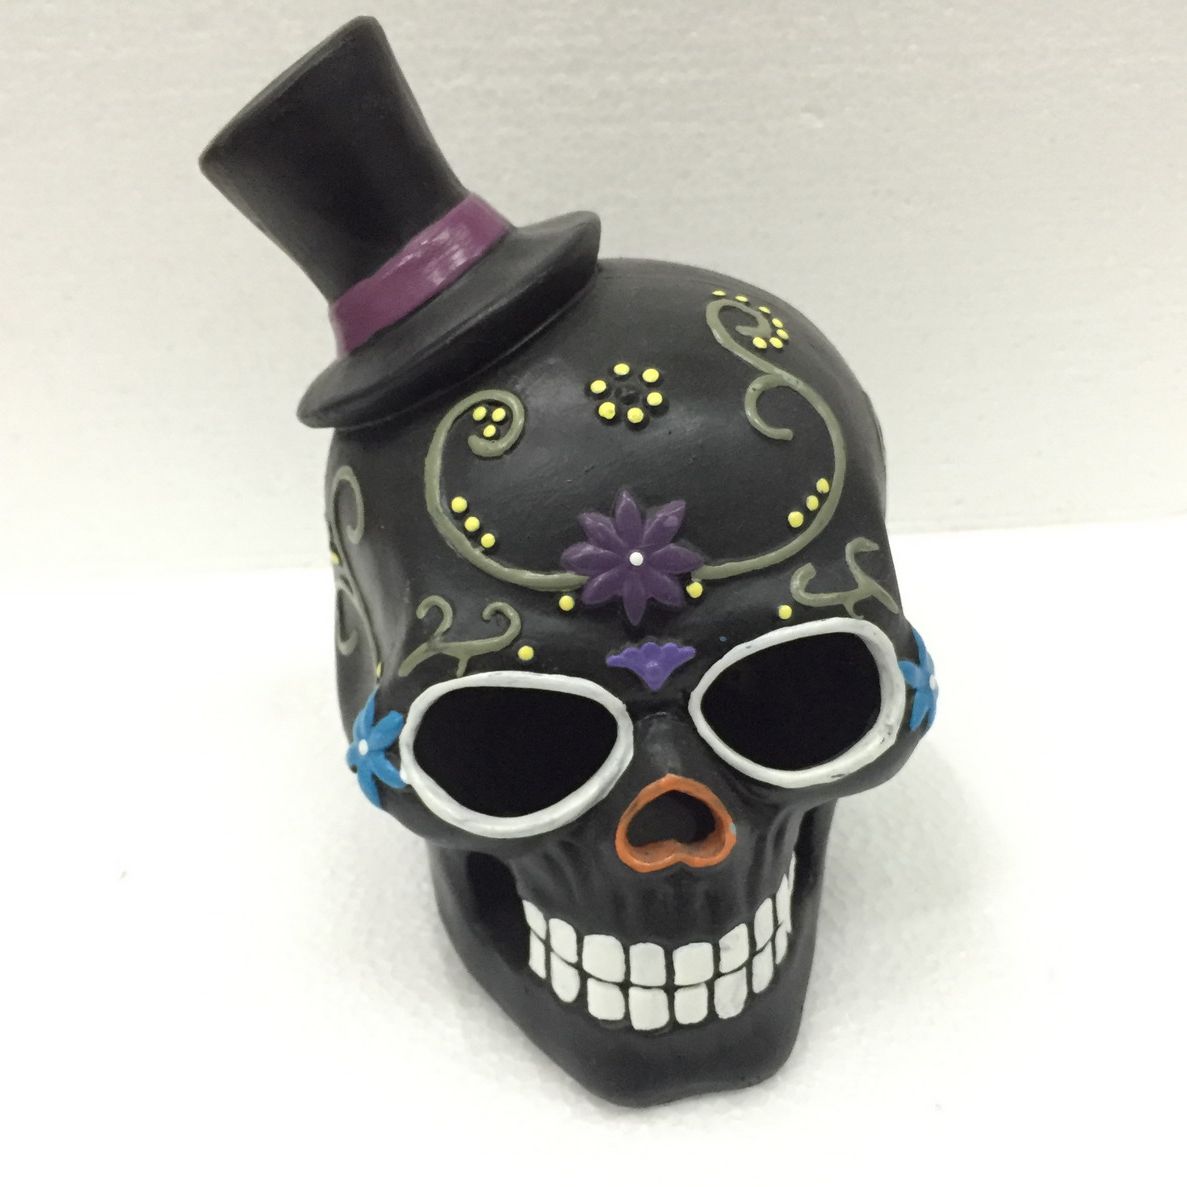 Direct Factory Produce Ceramic Decorative Skull Head